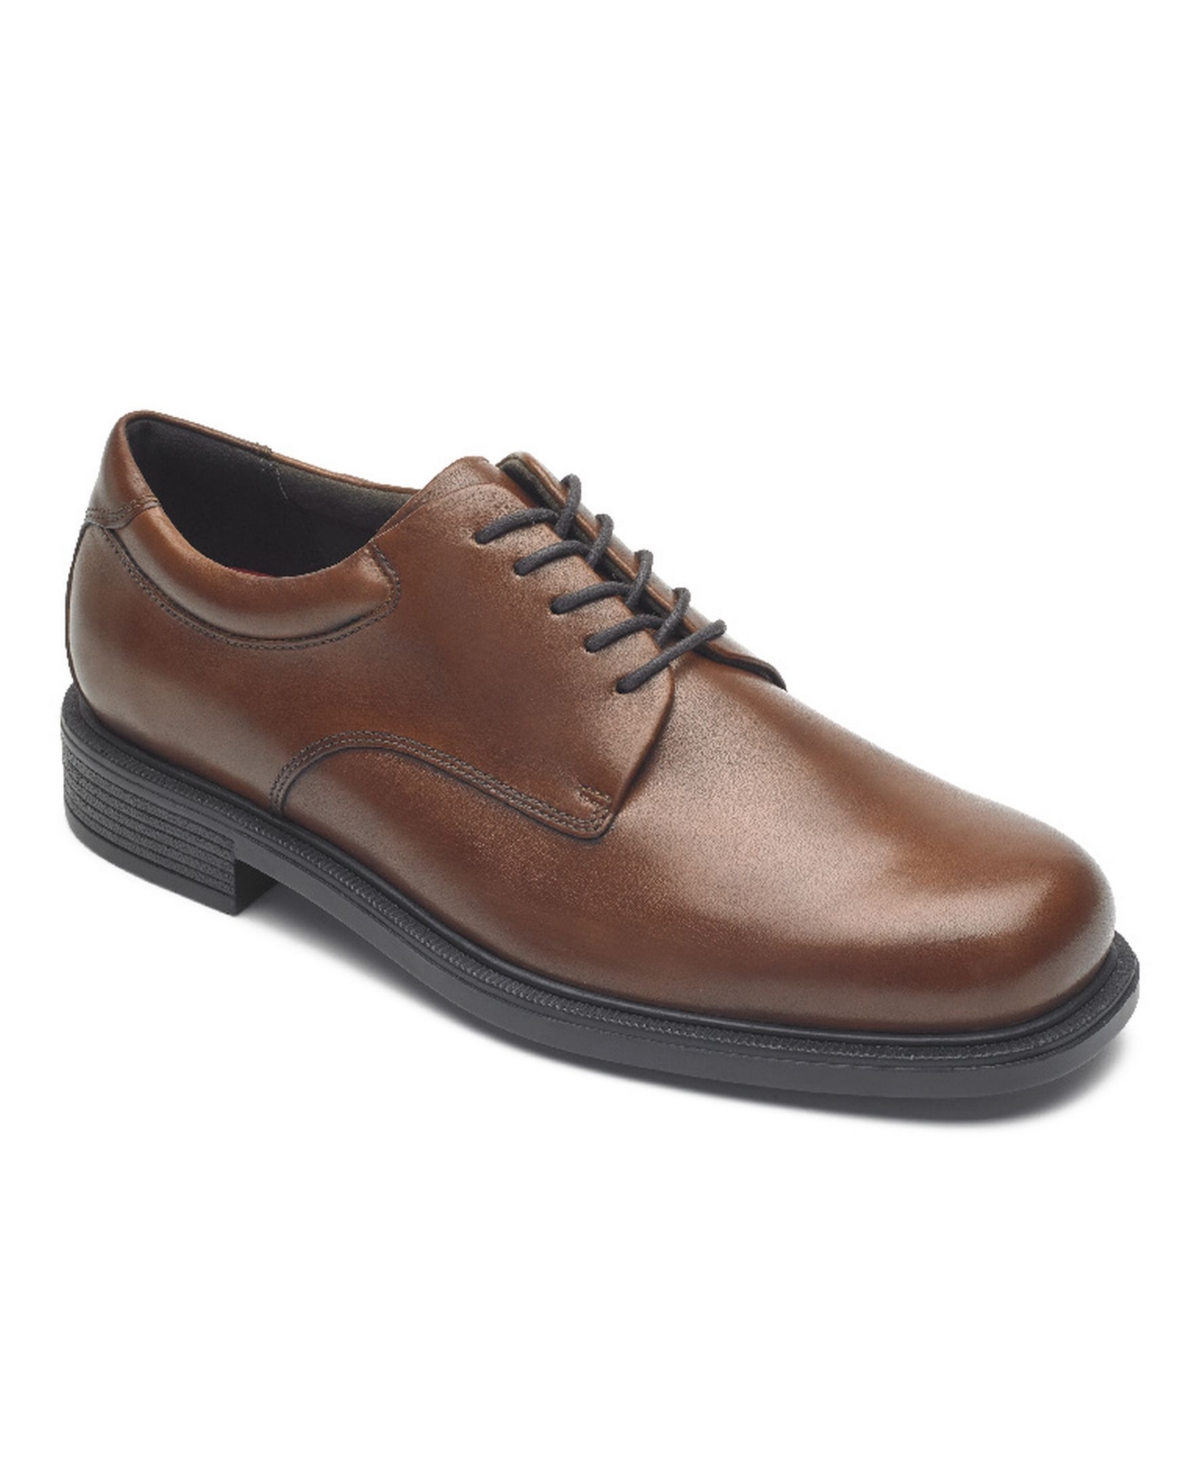 Men's Margin Casual Shoes - Brown